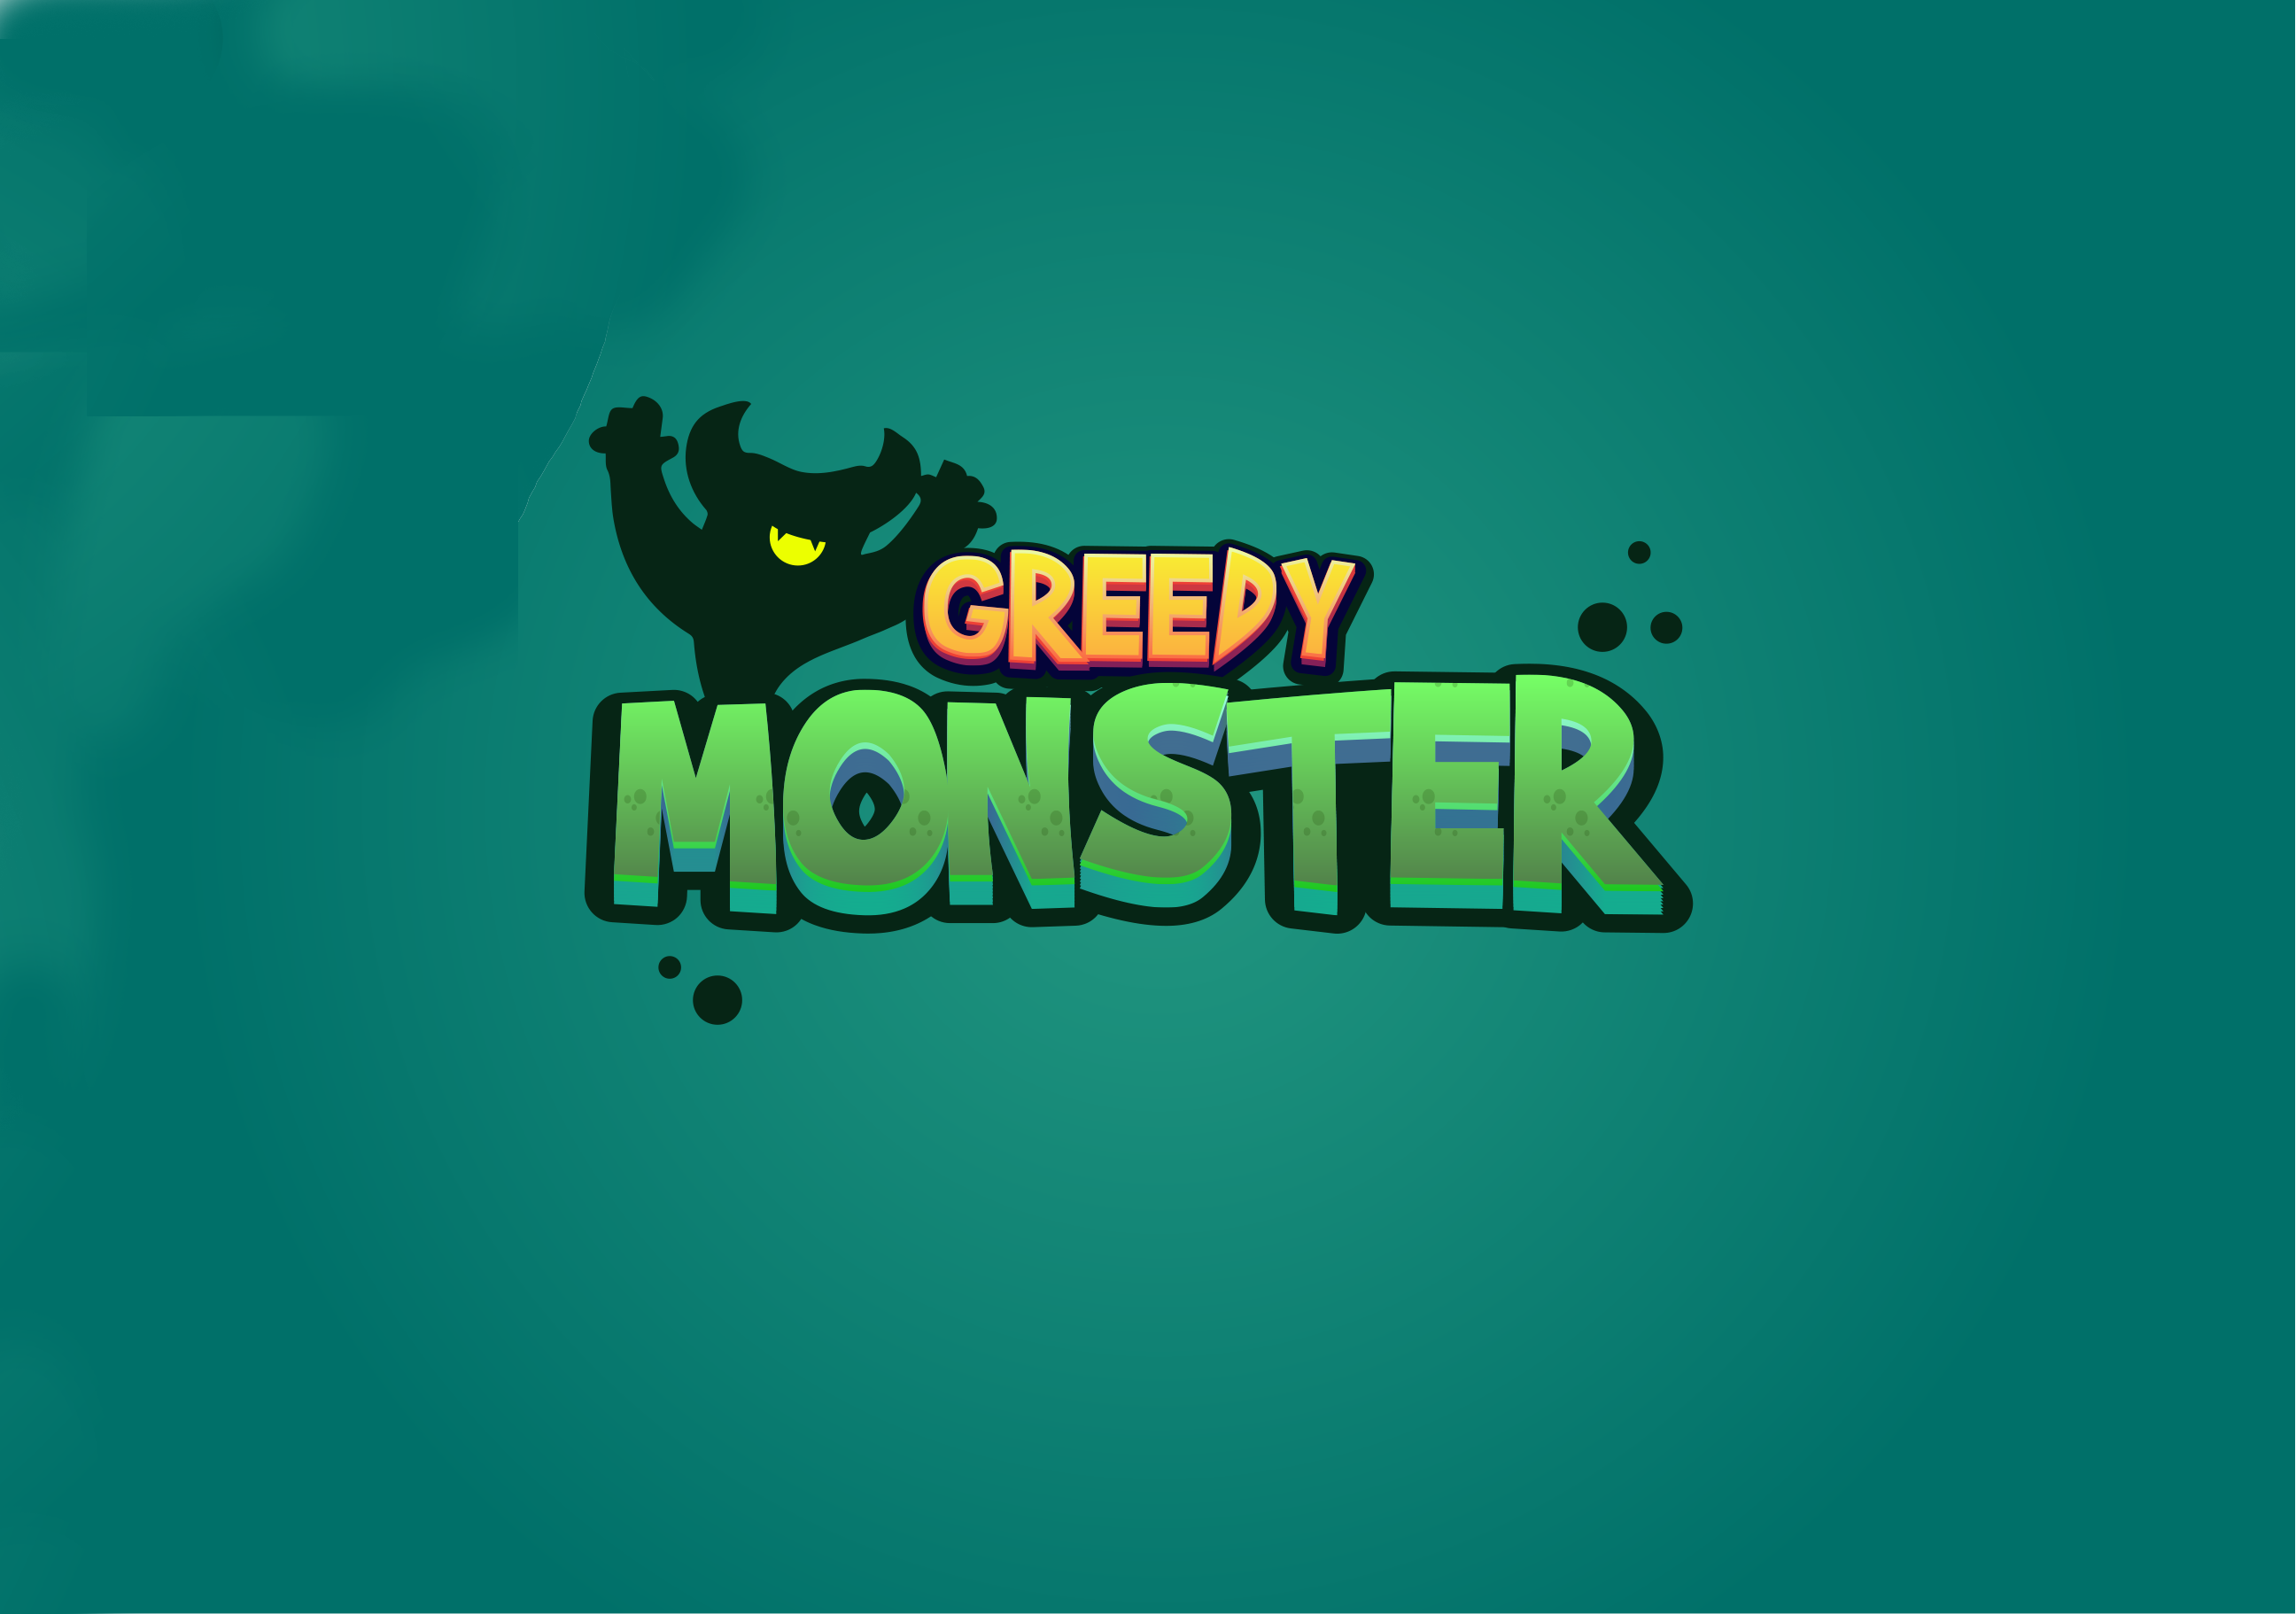 Greedy Monsters